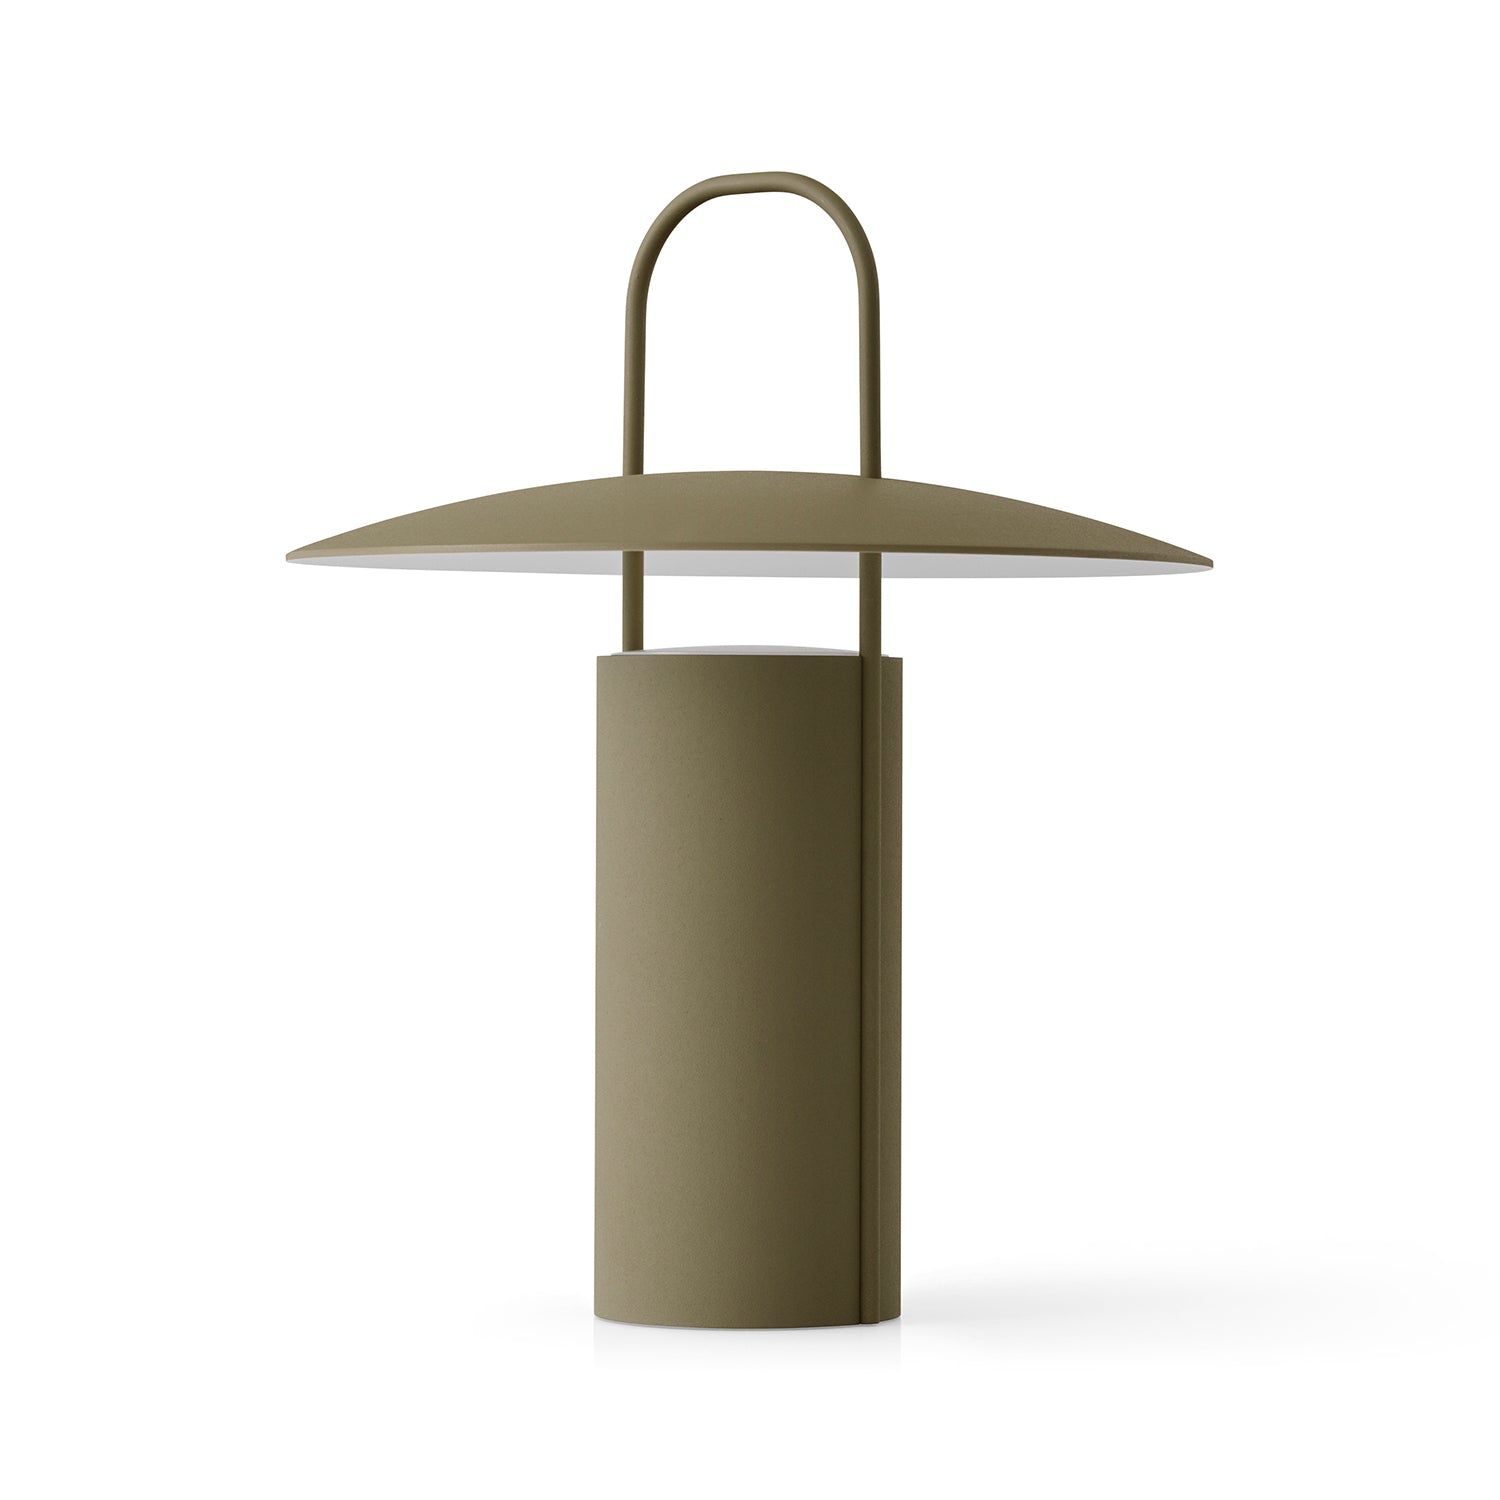 Ray Portable Table Lamp - The Design Choice